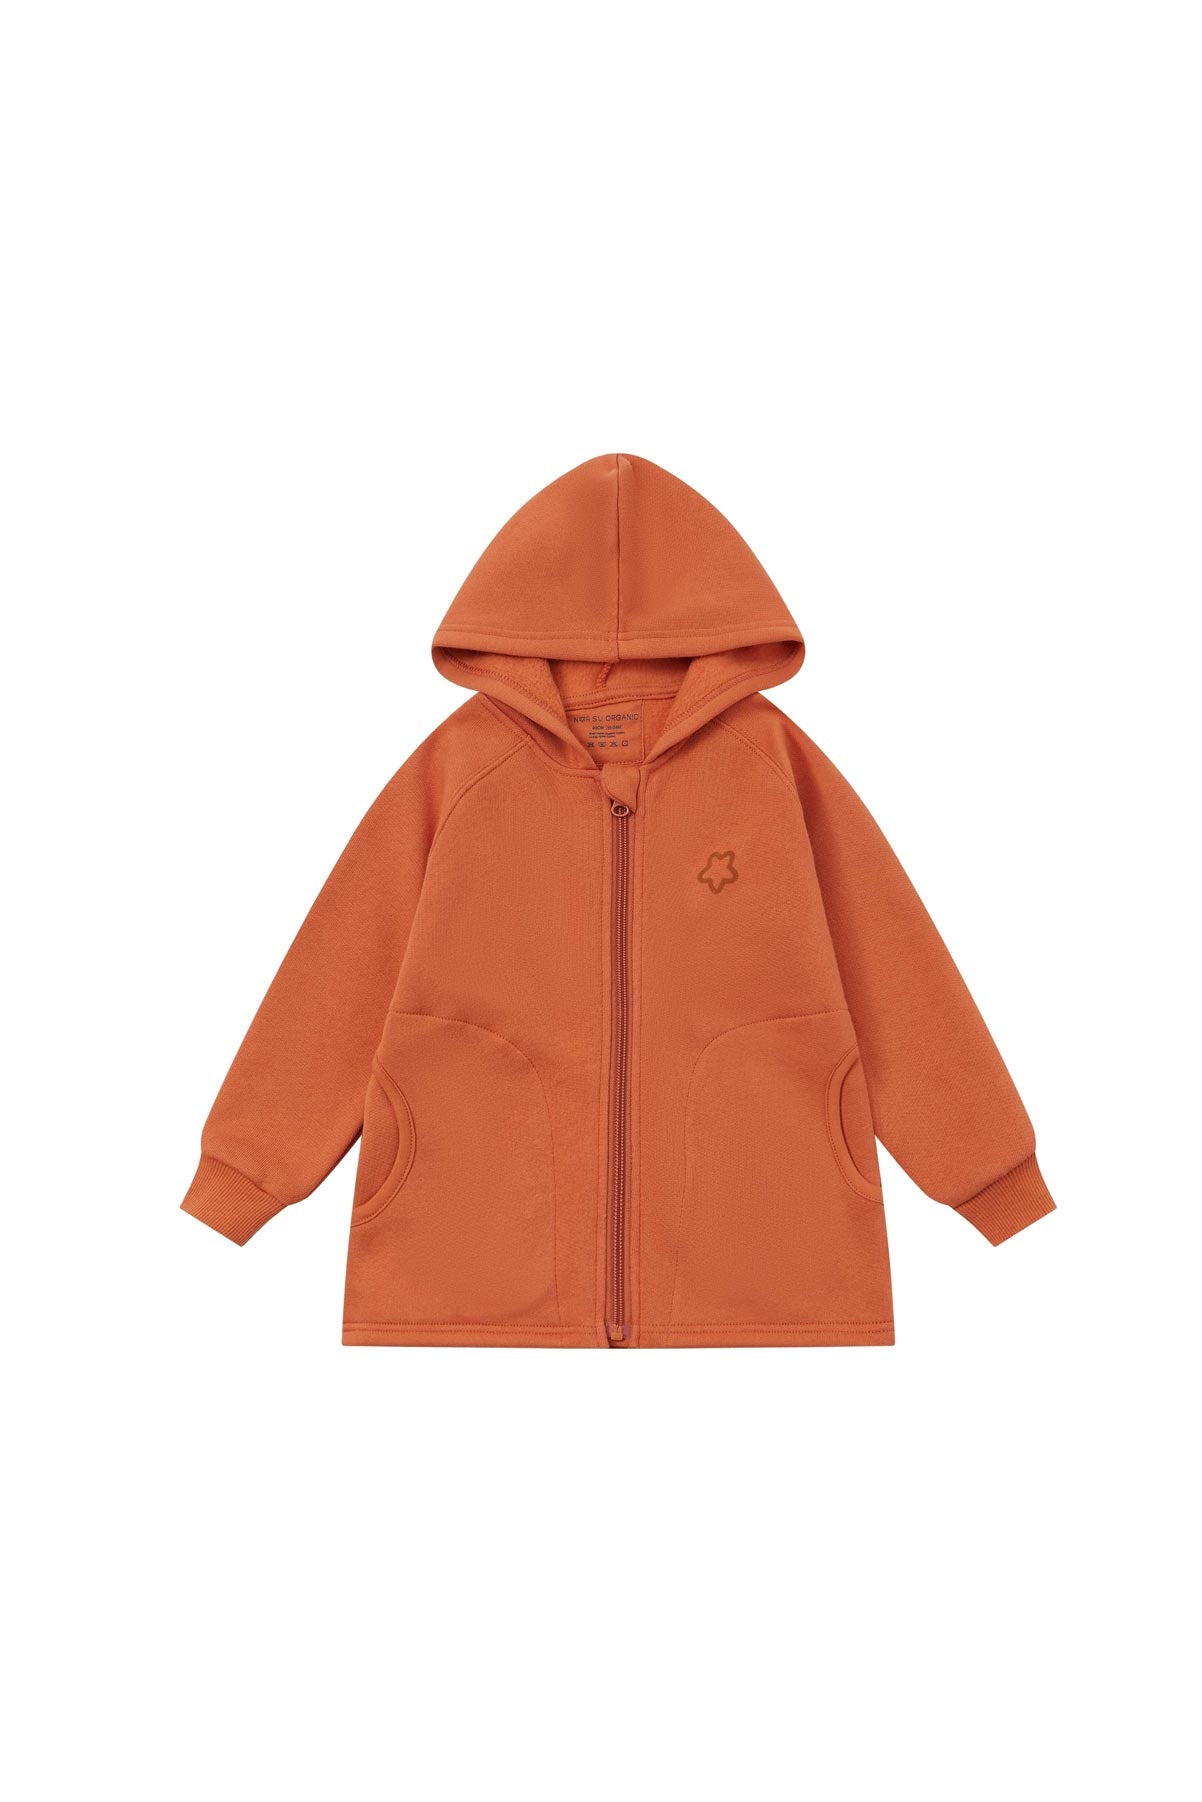 Front of Toddler Organic Fleece Hooded Jacket-Rust